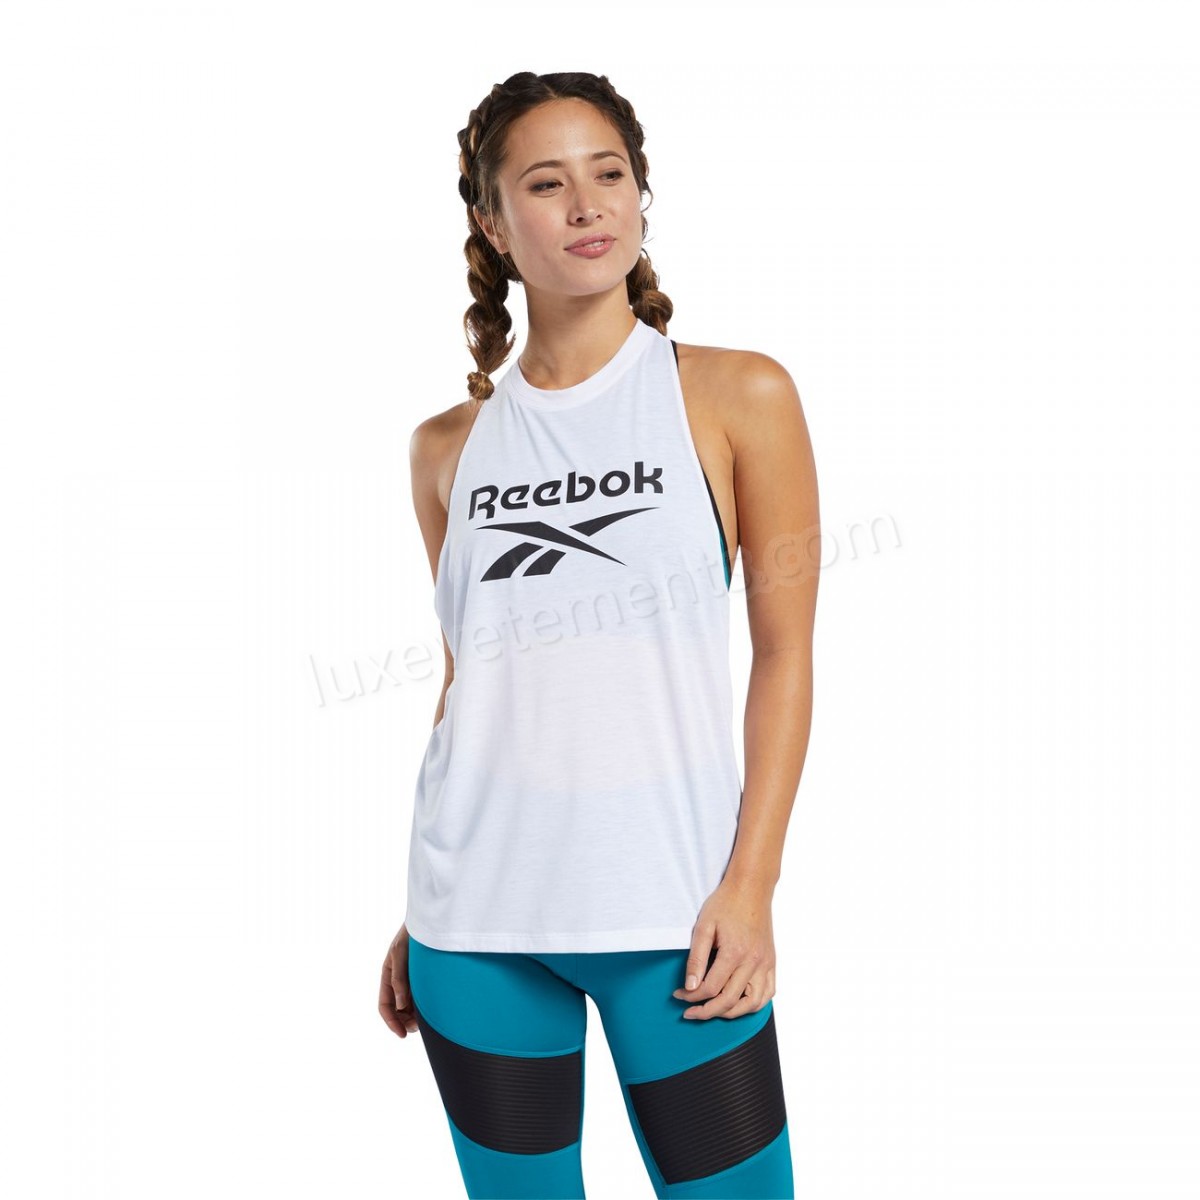 Reebok-Fitness femme REEBOK Débardeur femme Reebok Workout Ready Supremium BL Vente en ligne - -4